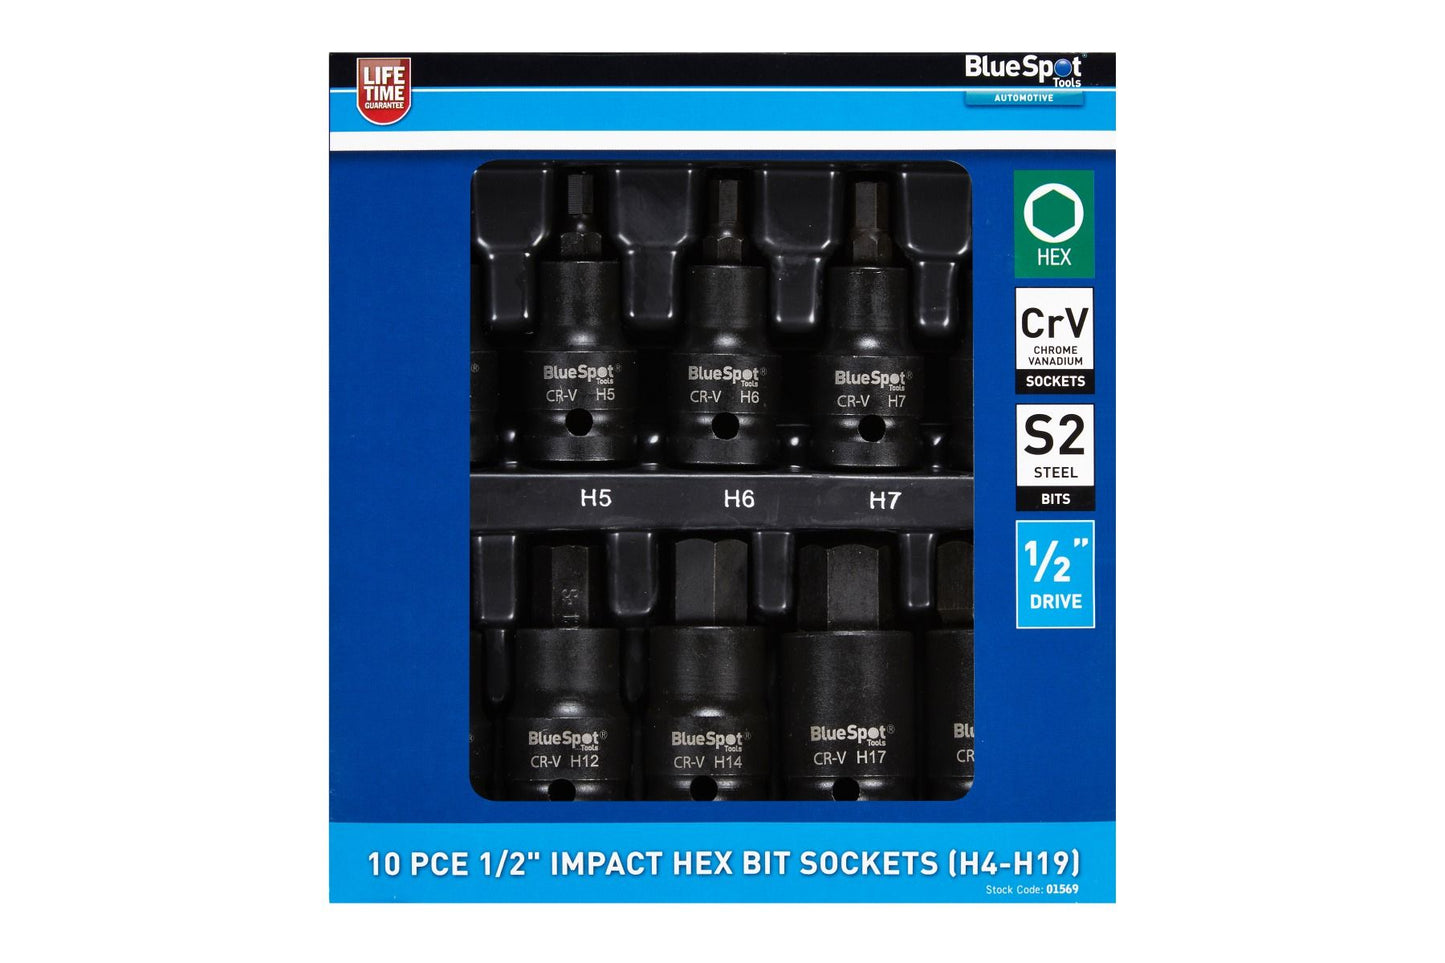 10 PCE 1/2" IMPACT HEX BIT SOCKETS (H4-H19)